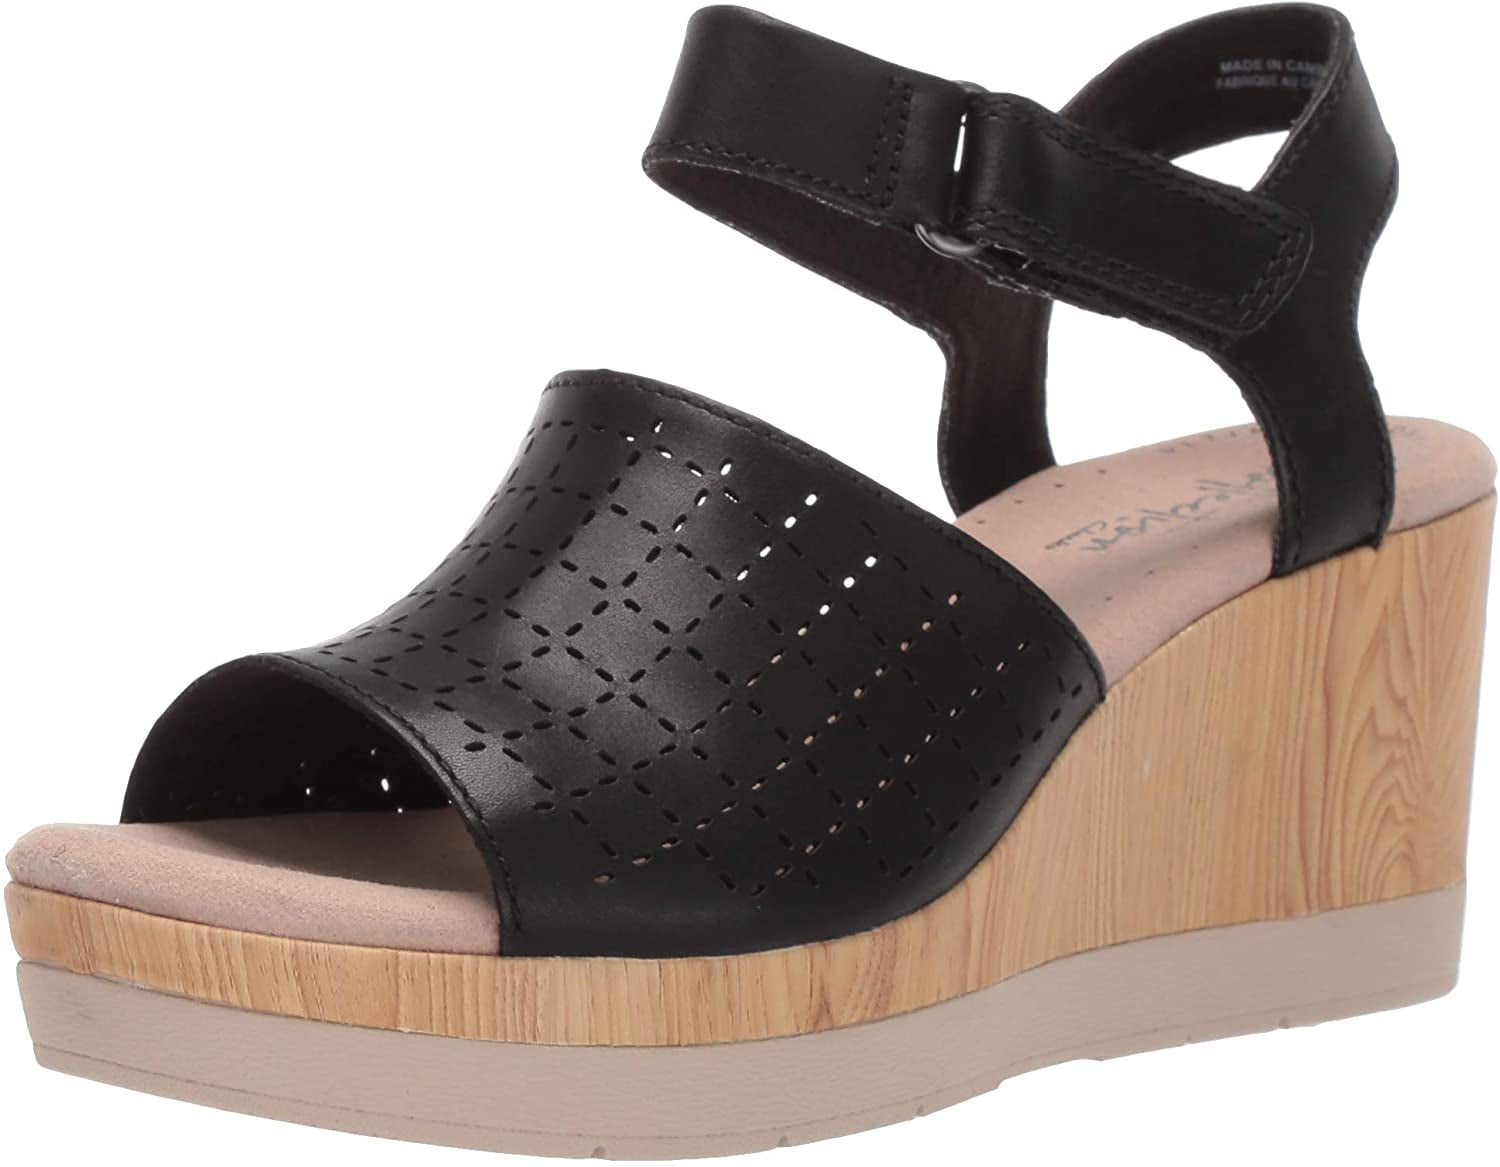 clarks women's classic wedge sandal